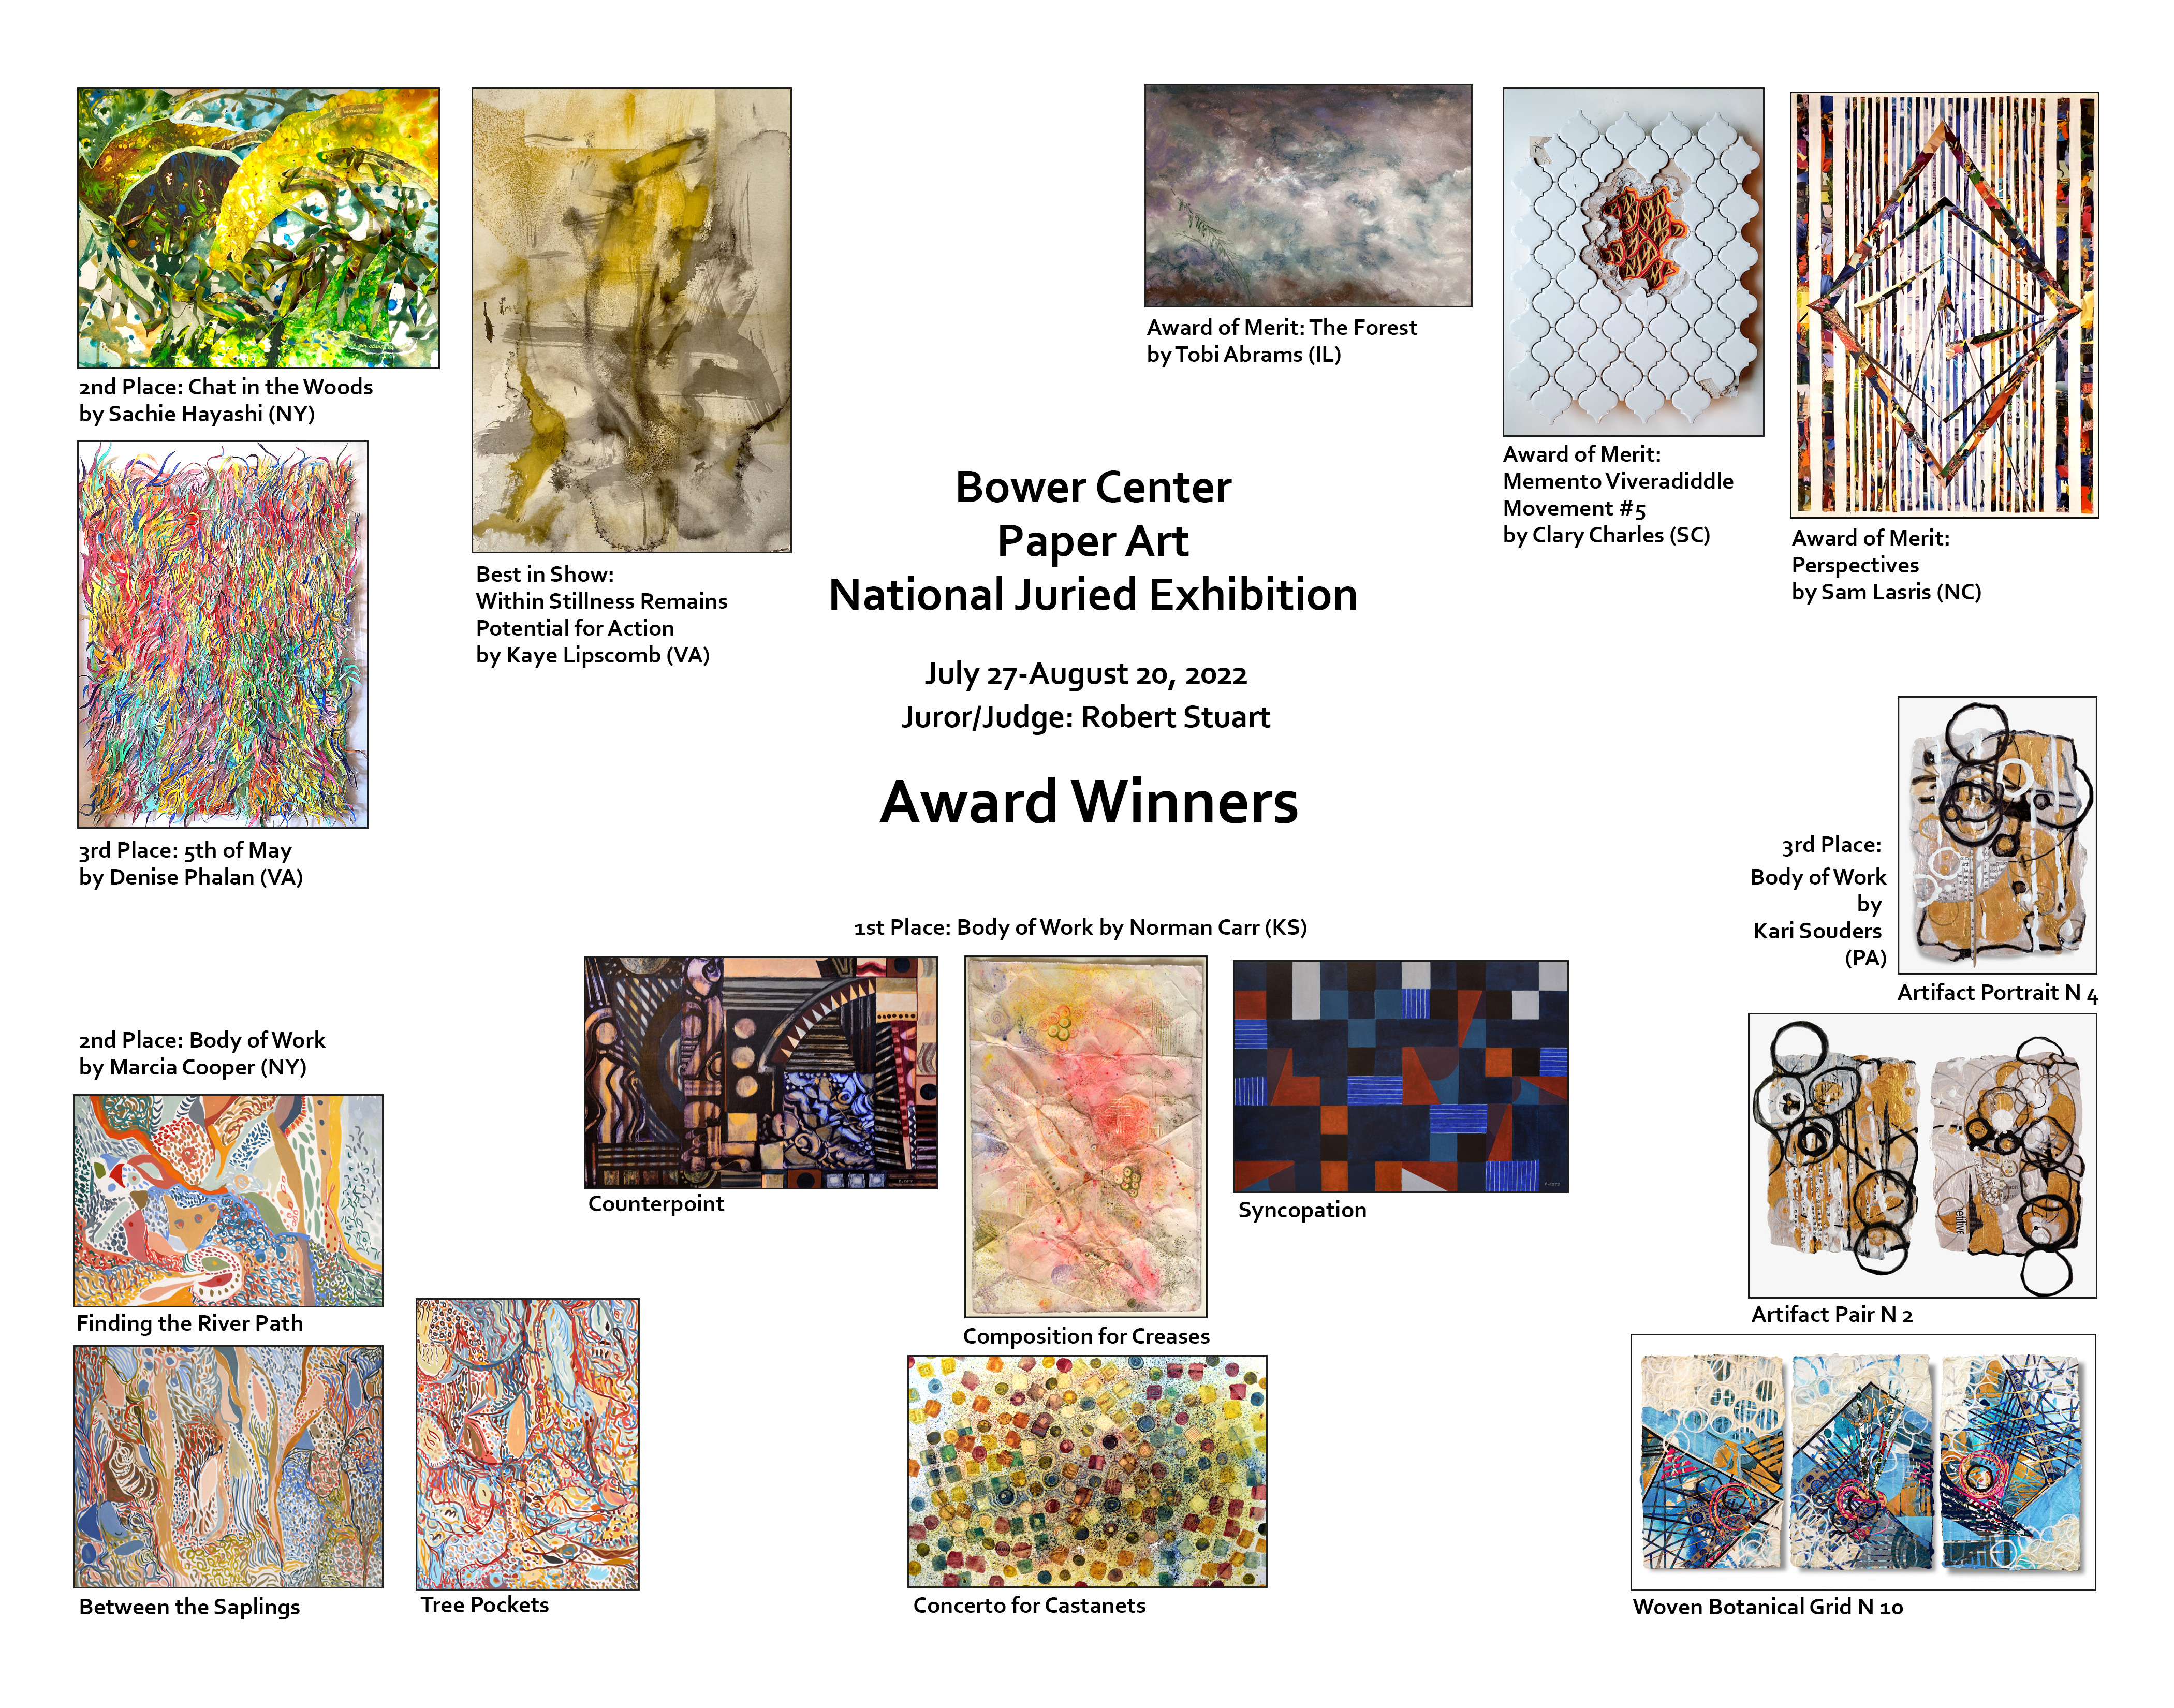 Award Winner Composite_Paper Art Nat'l Juried_14x11_rev